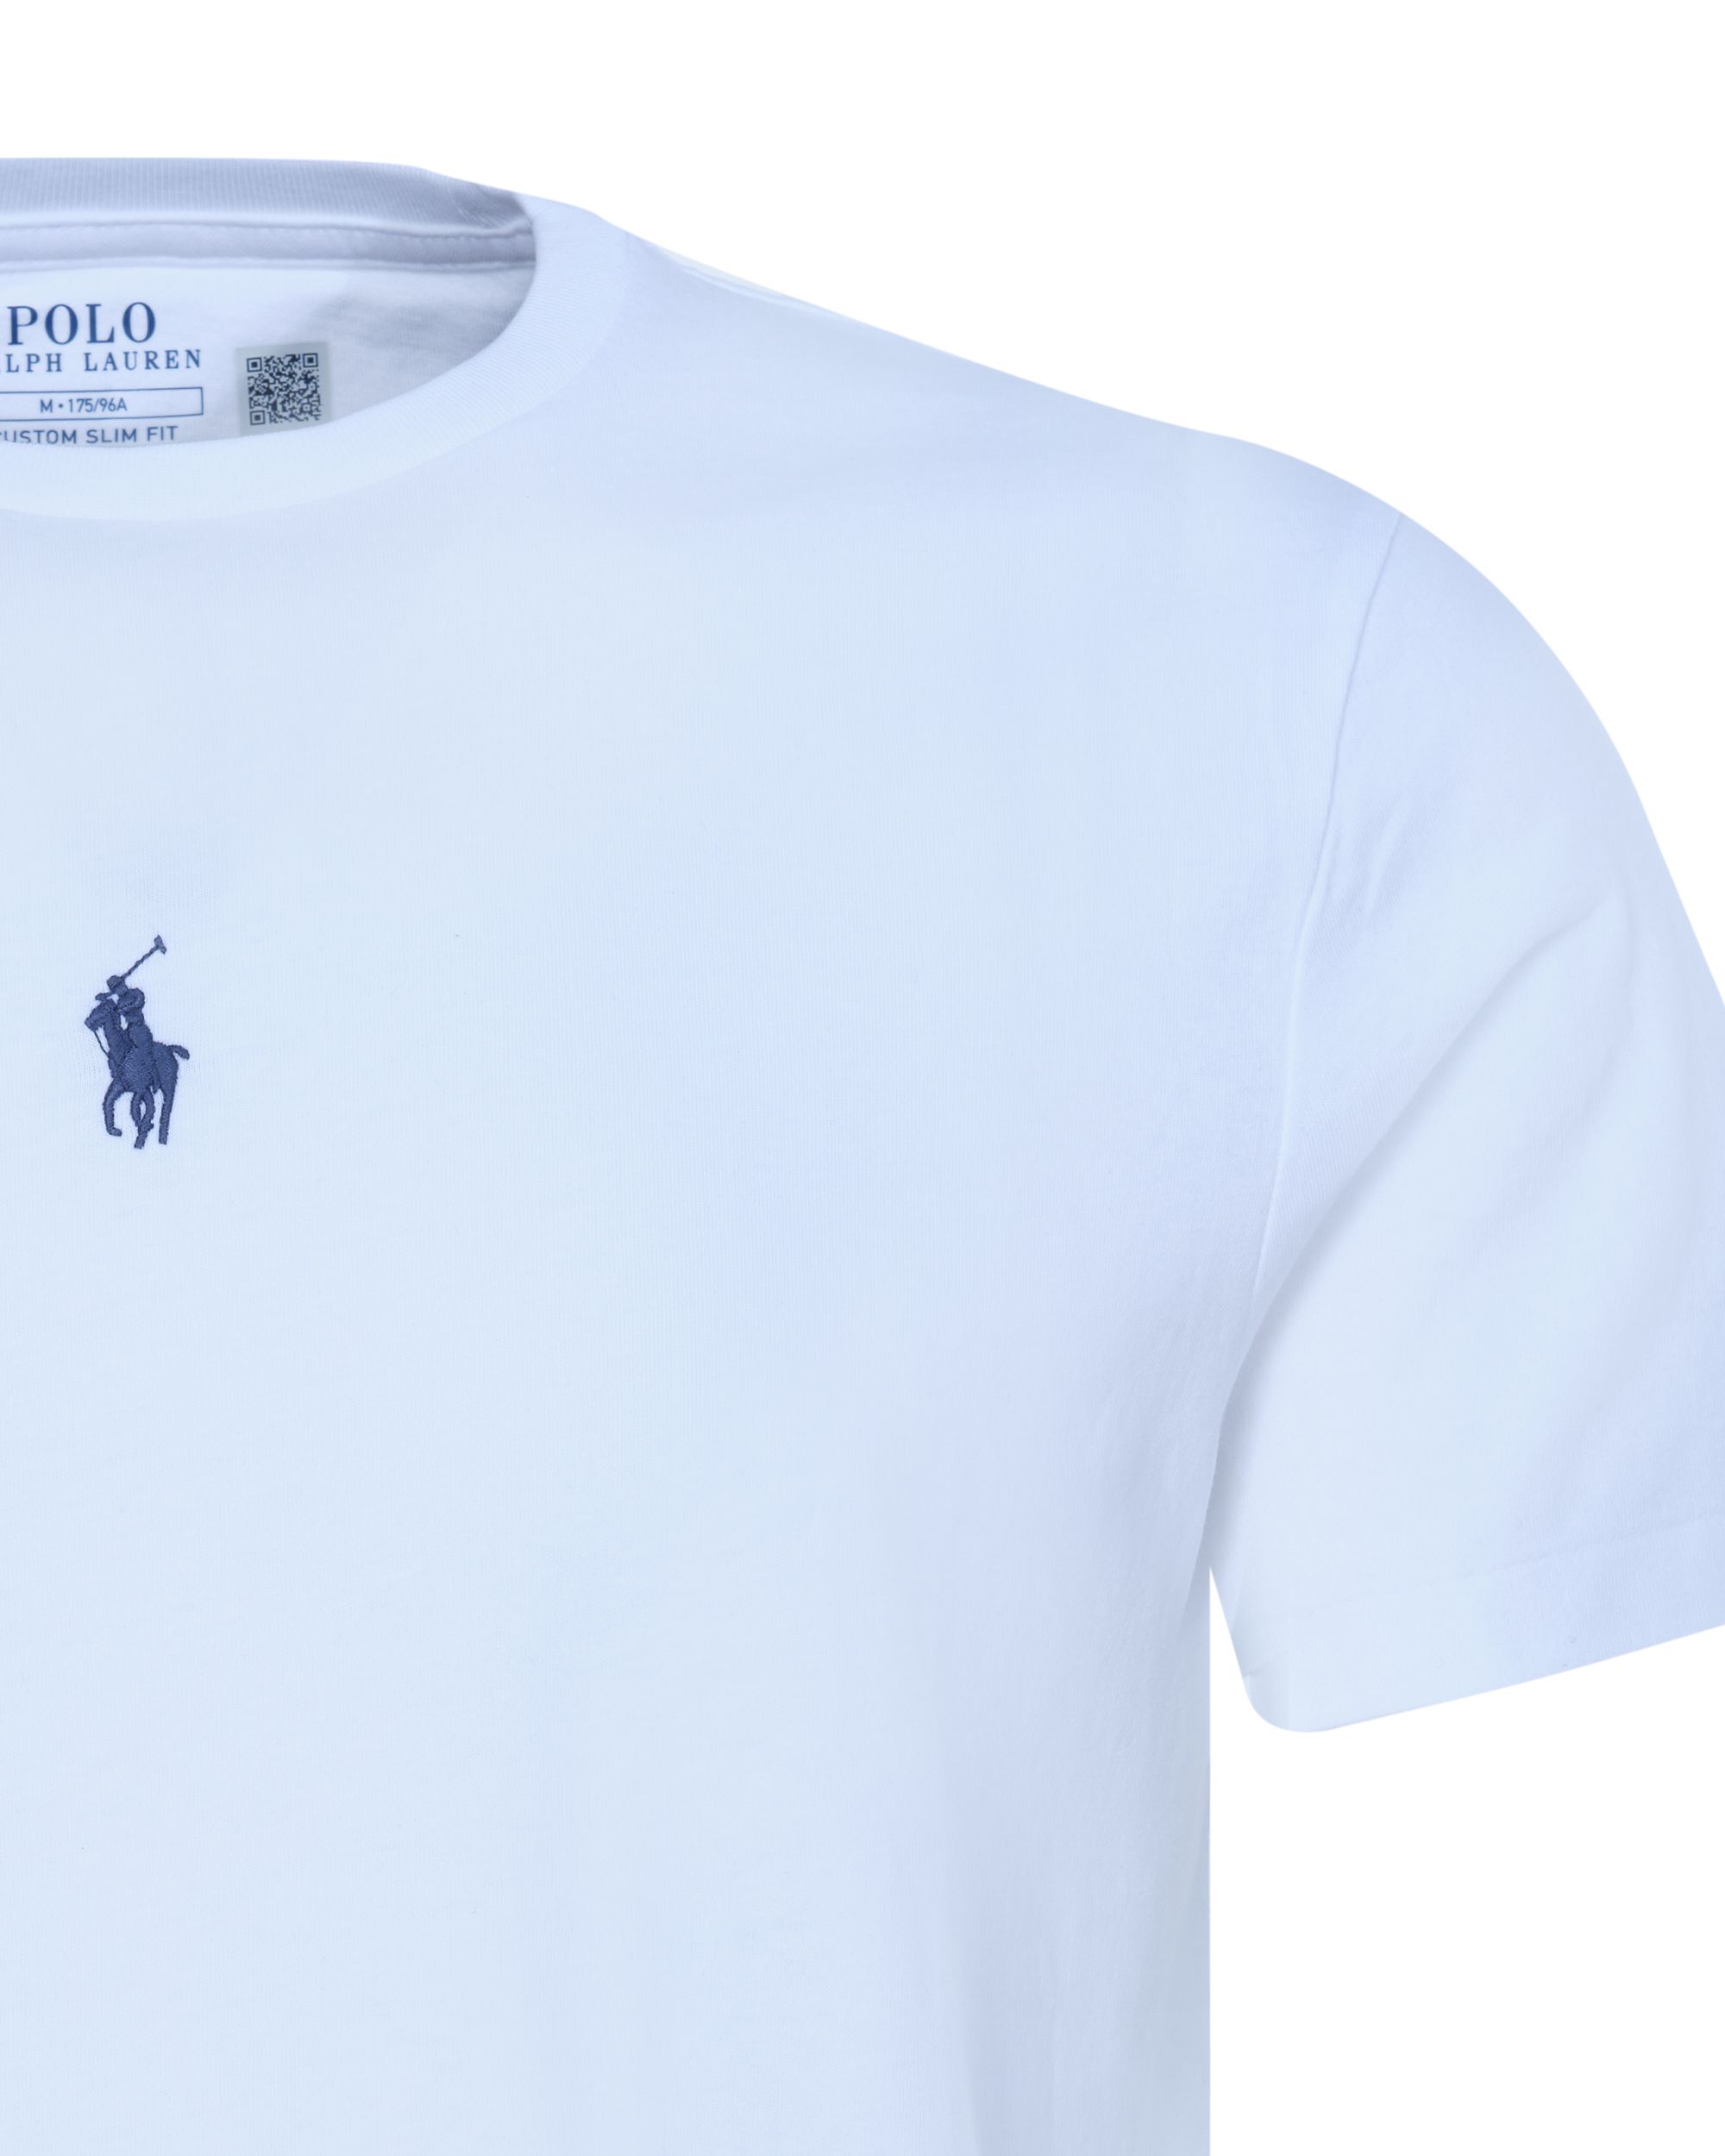 Polo Ralph Lauren T-shirt KM Wit 080571-001-L